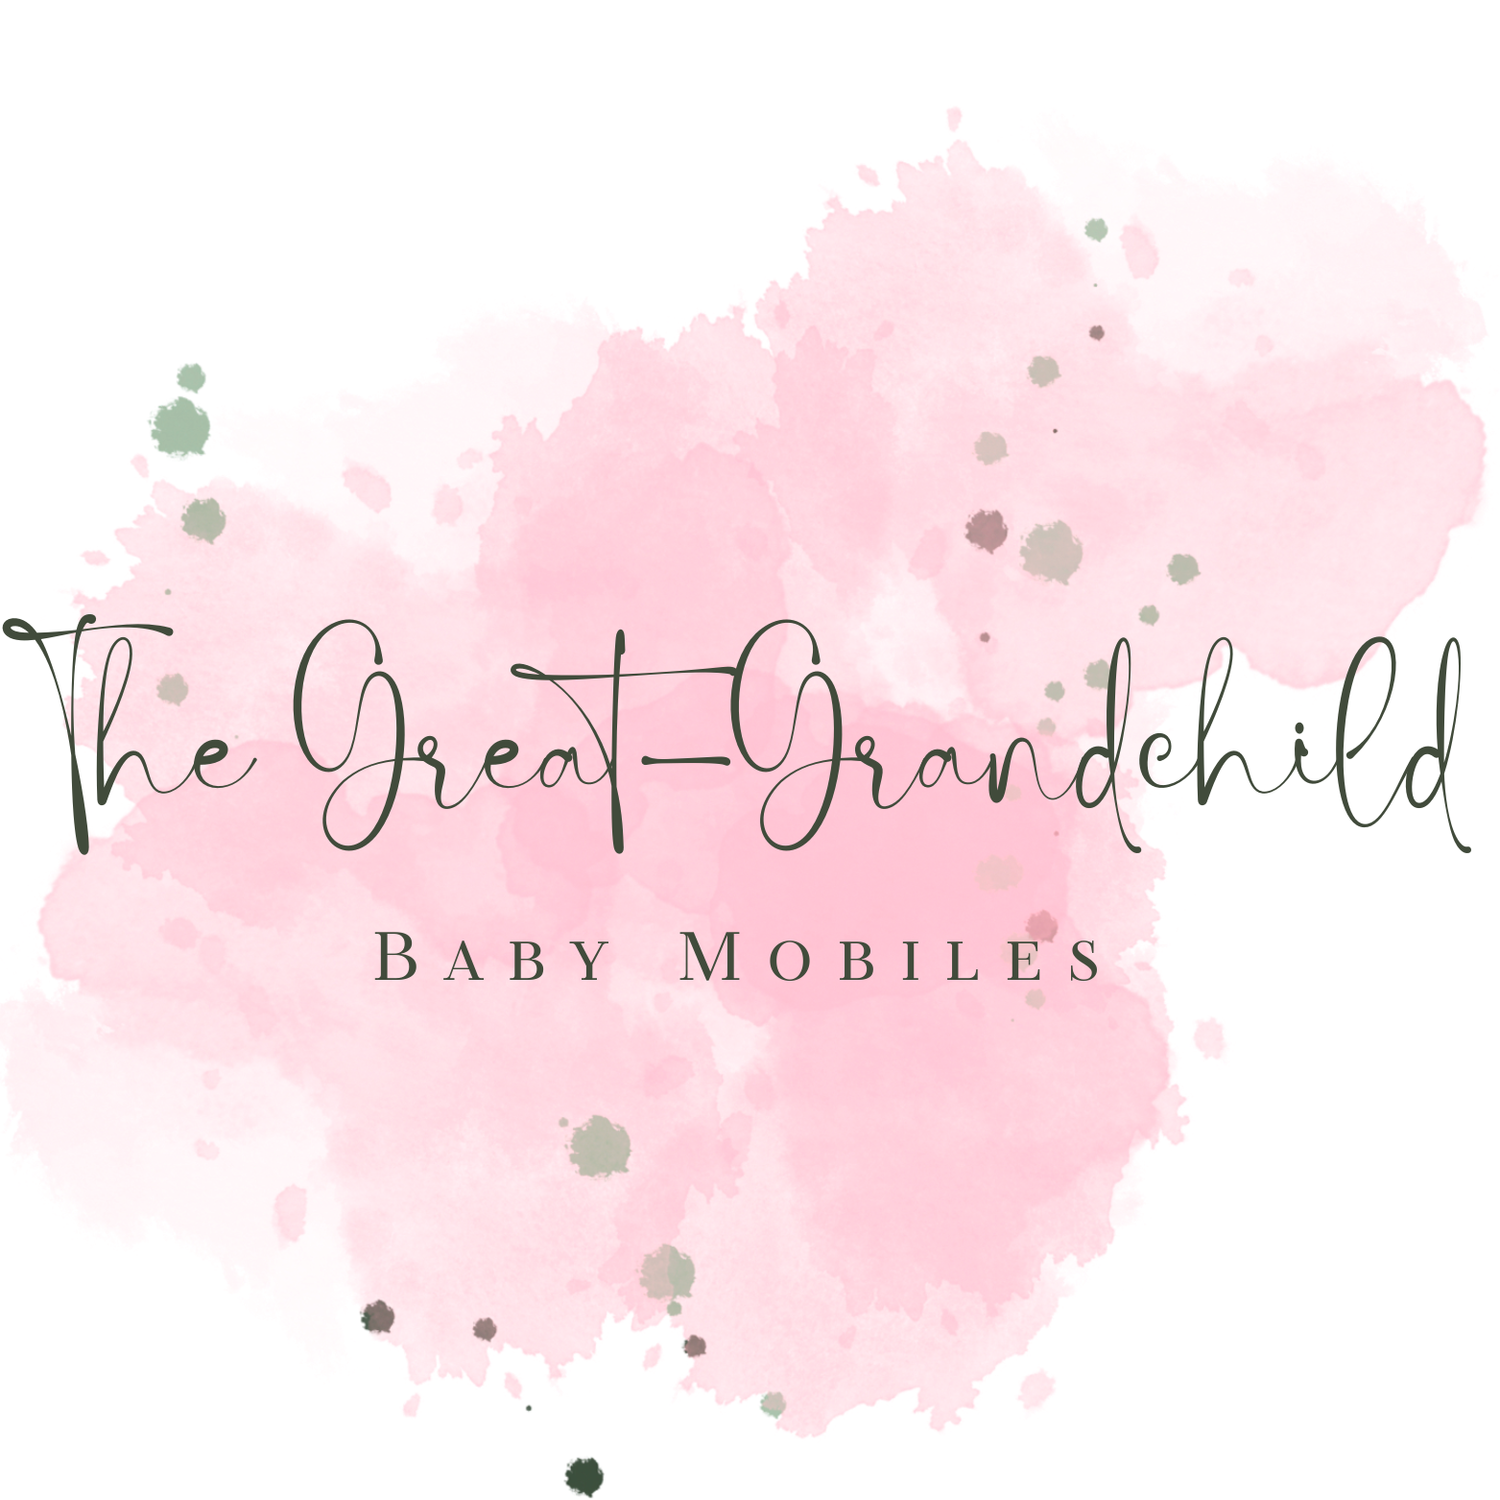 The Great-Grandchild